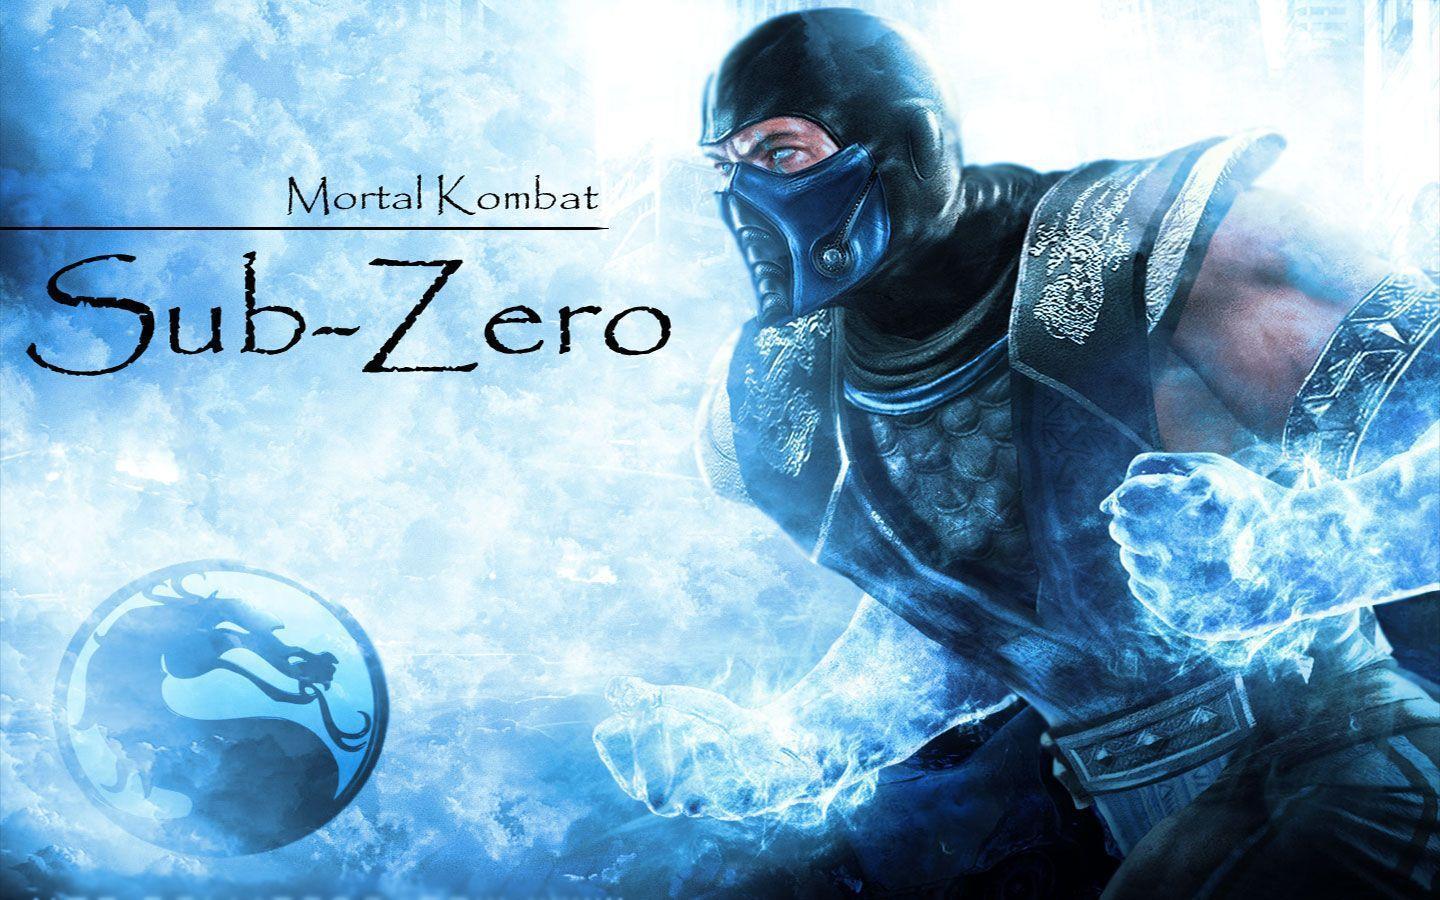 image For > Mortal Kombat Deception Sub Zero Wallpaper